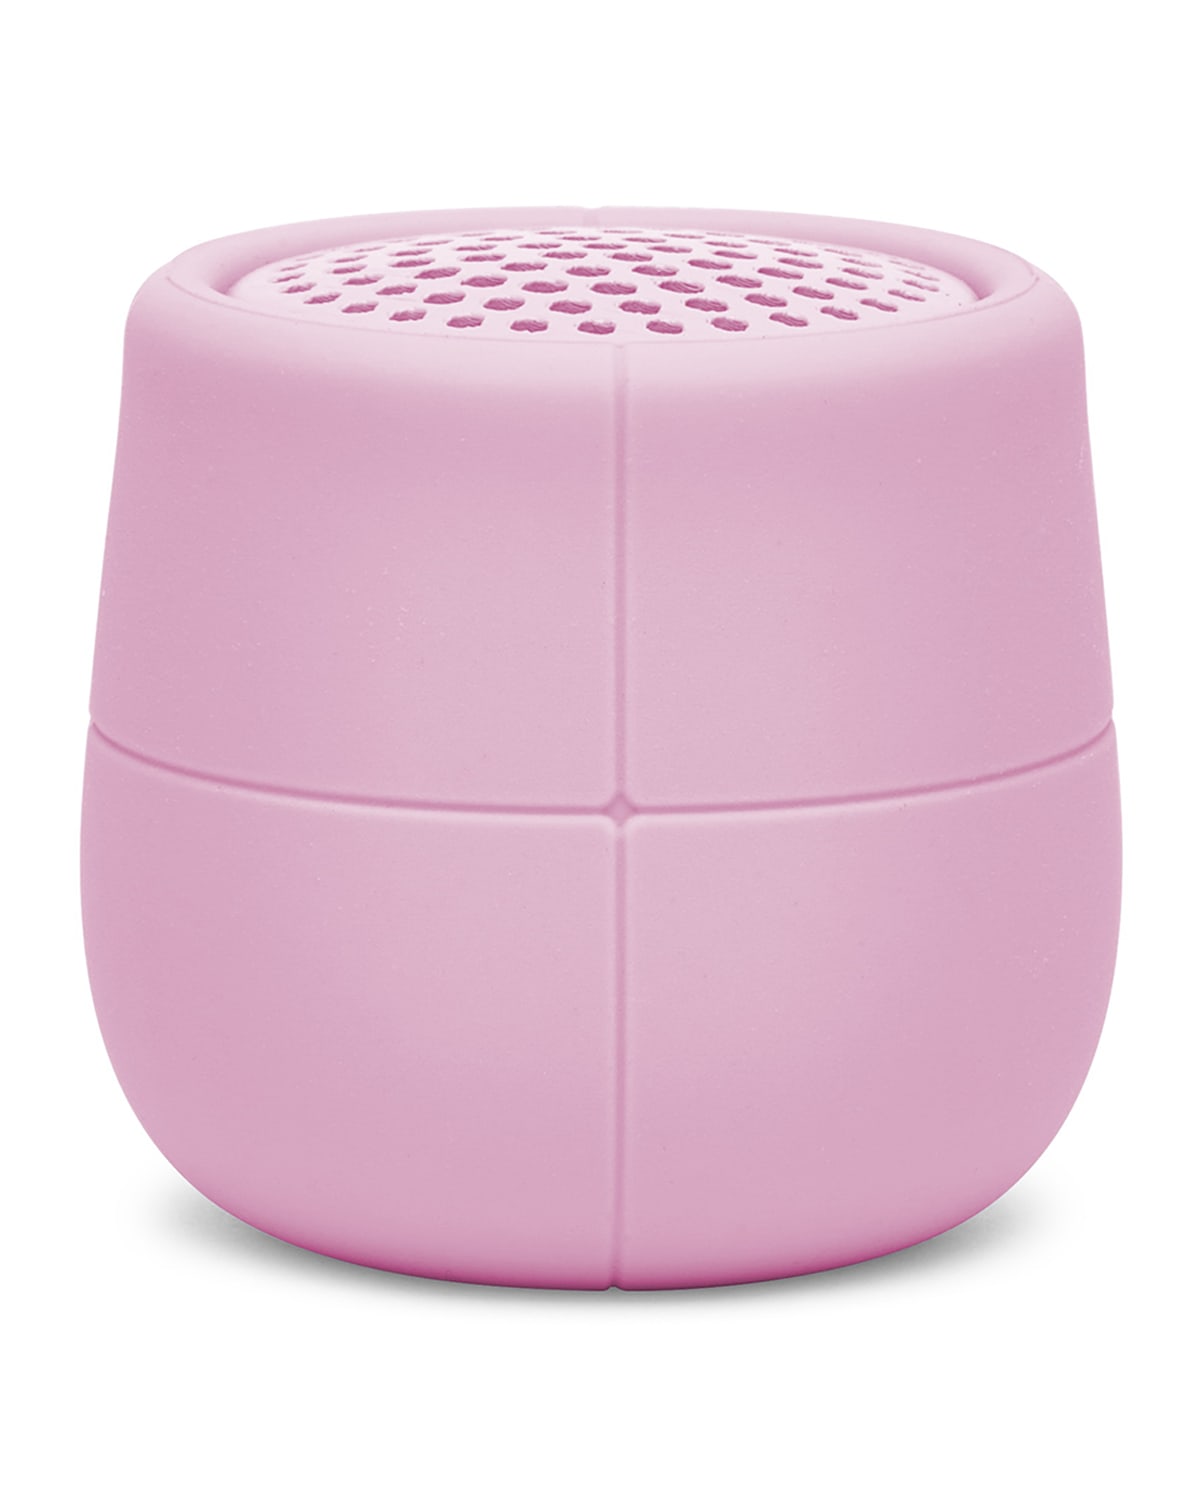 Lexon Design Mino X Water Resistant Floating Bluetooth Speaker In Rubber Pink